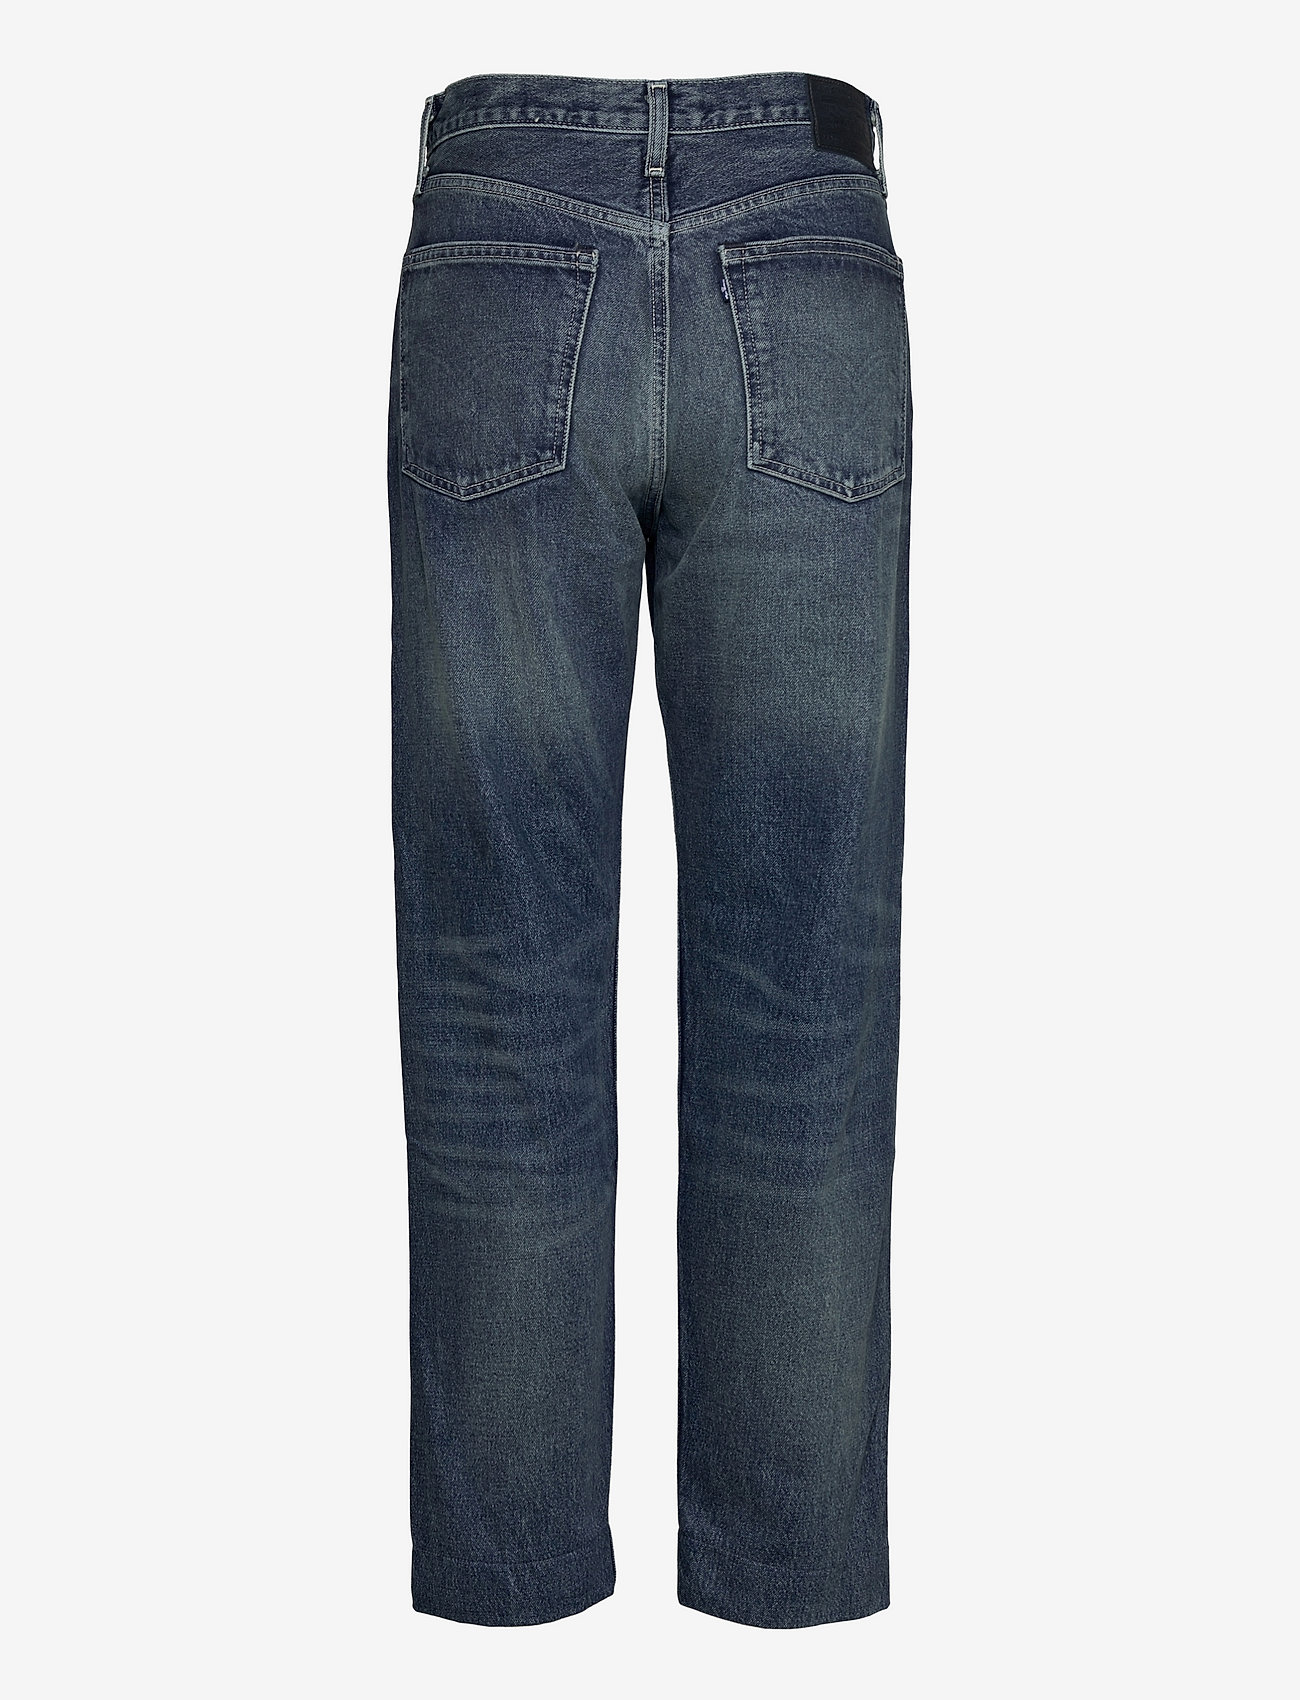 Levi's Made & Crafted - LMC THE COLUMN LMC WATERLOG - raka jeans - med indigo - worn in - 1